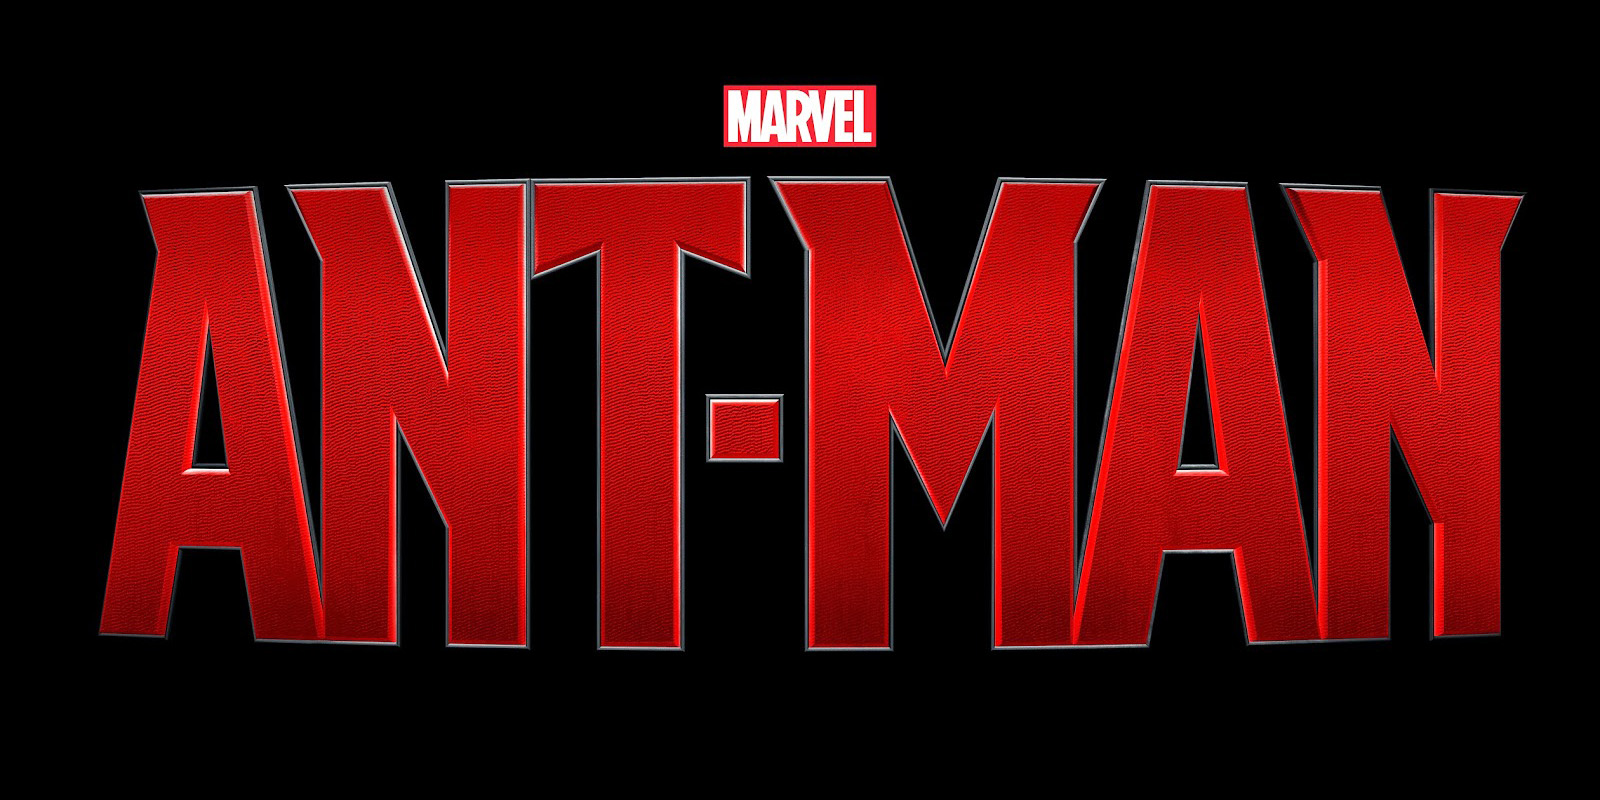 Marvel-Ant-Man-Logo-Textured.jpg